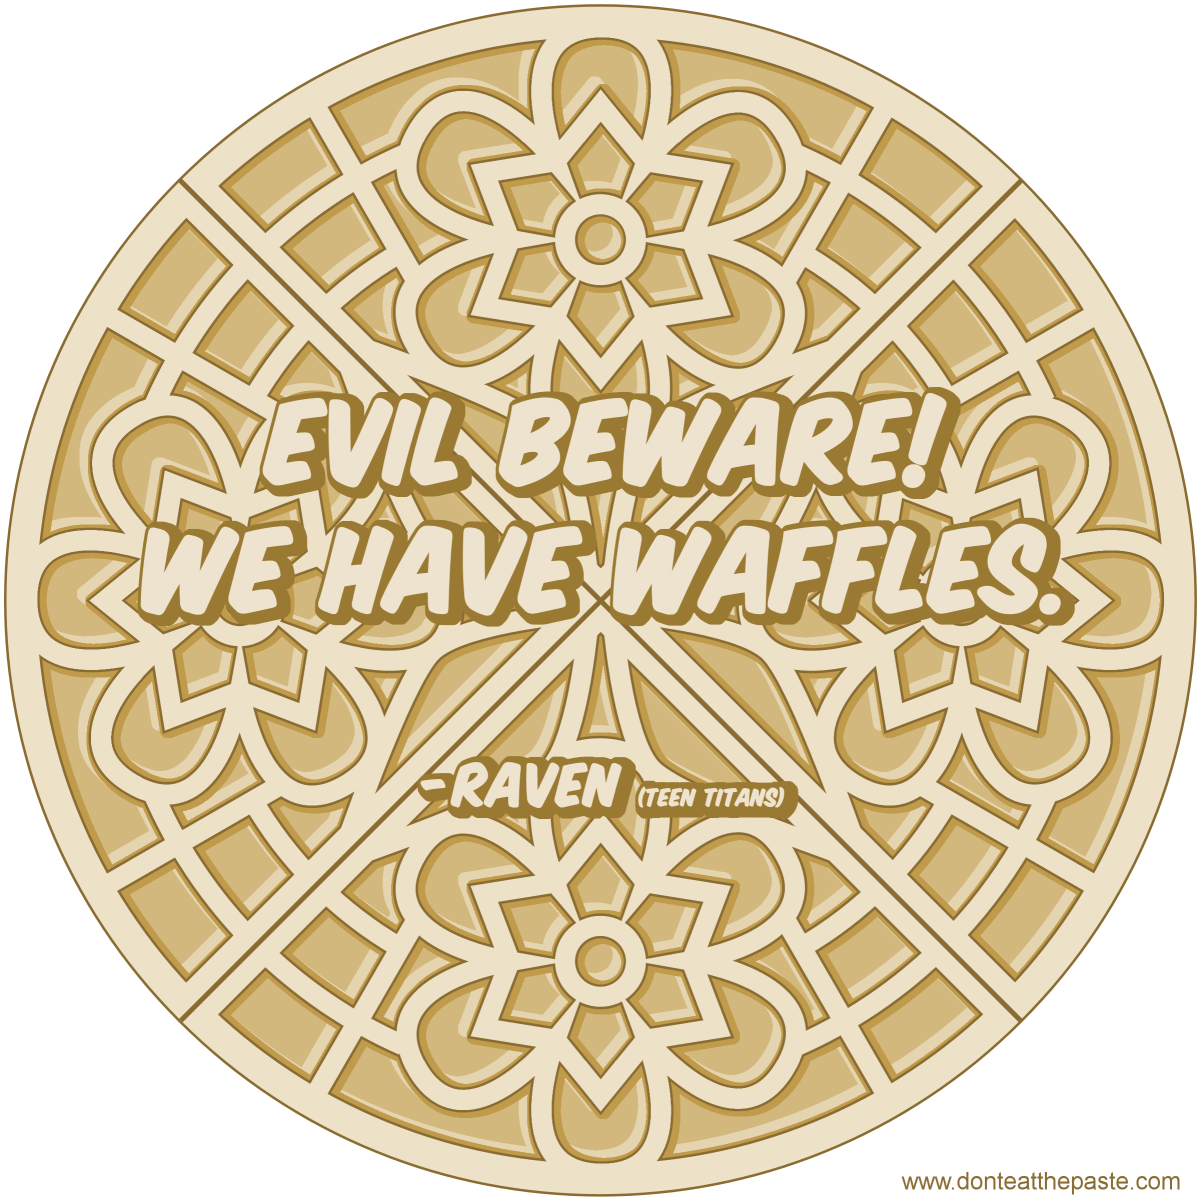 Evil beware- we have waffles.